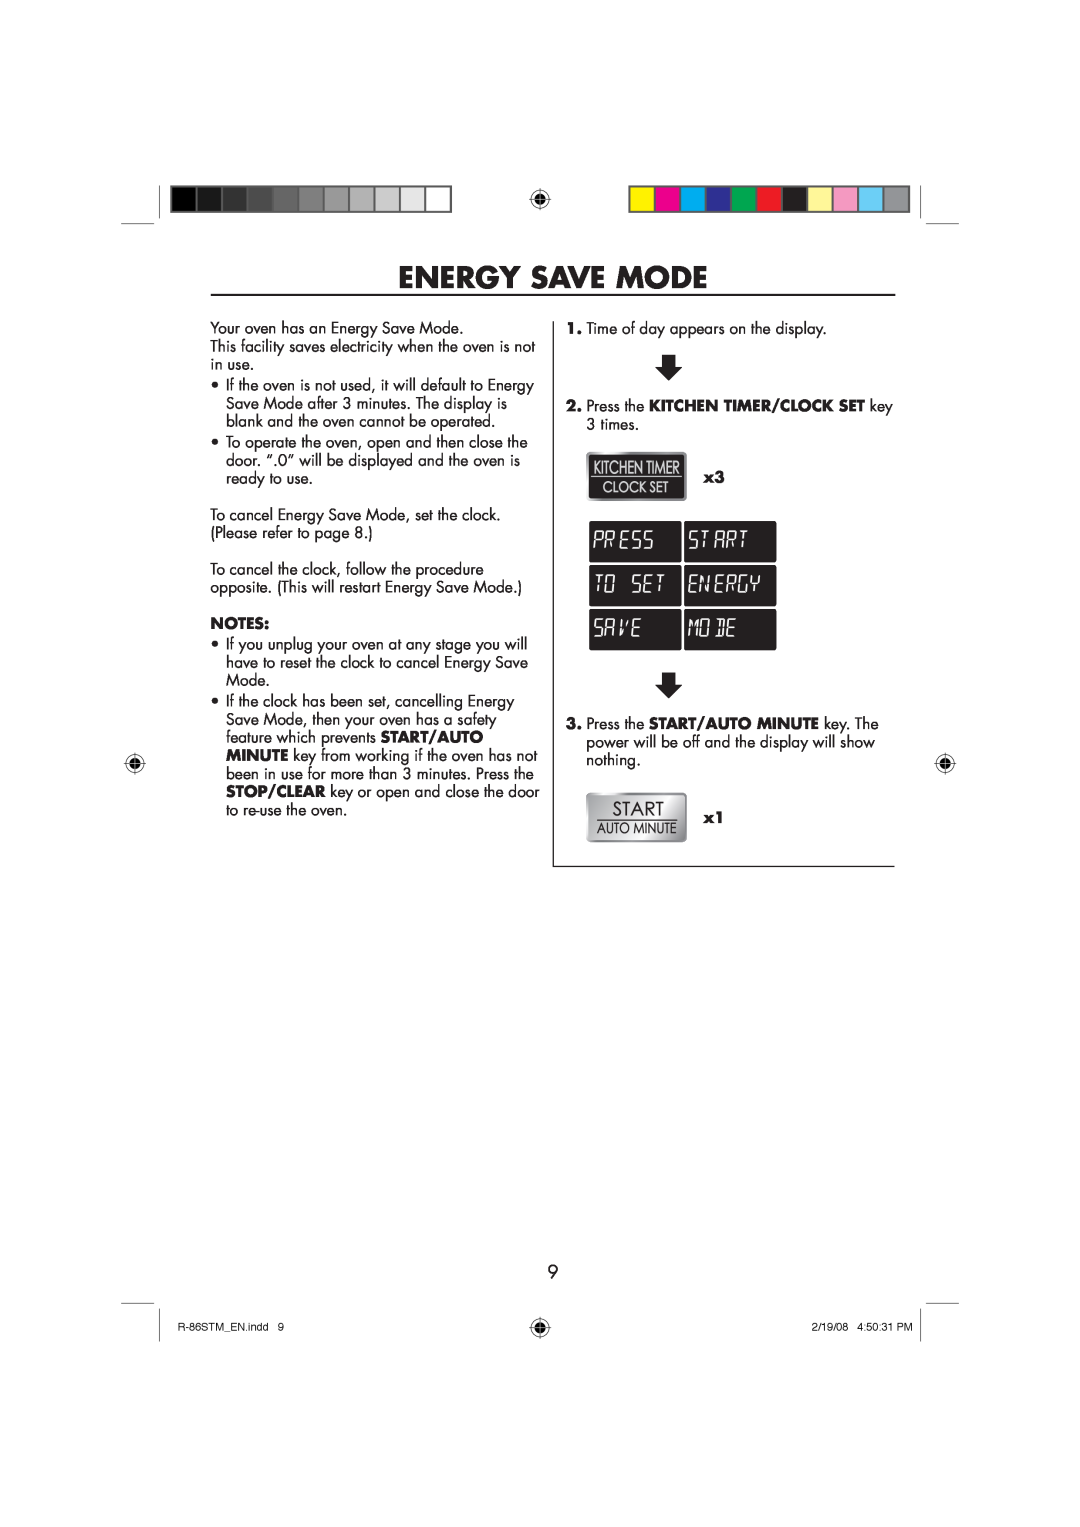 Sharp R-86STM manual Energy Save Mode, Press the KITCHEN TIMER/CLOCK SET key 3 times 